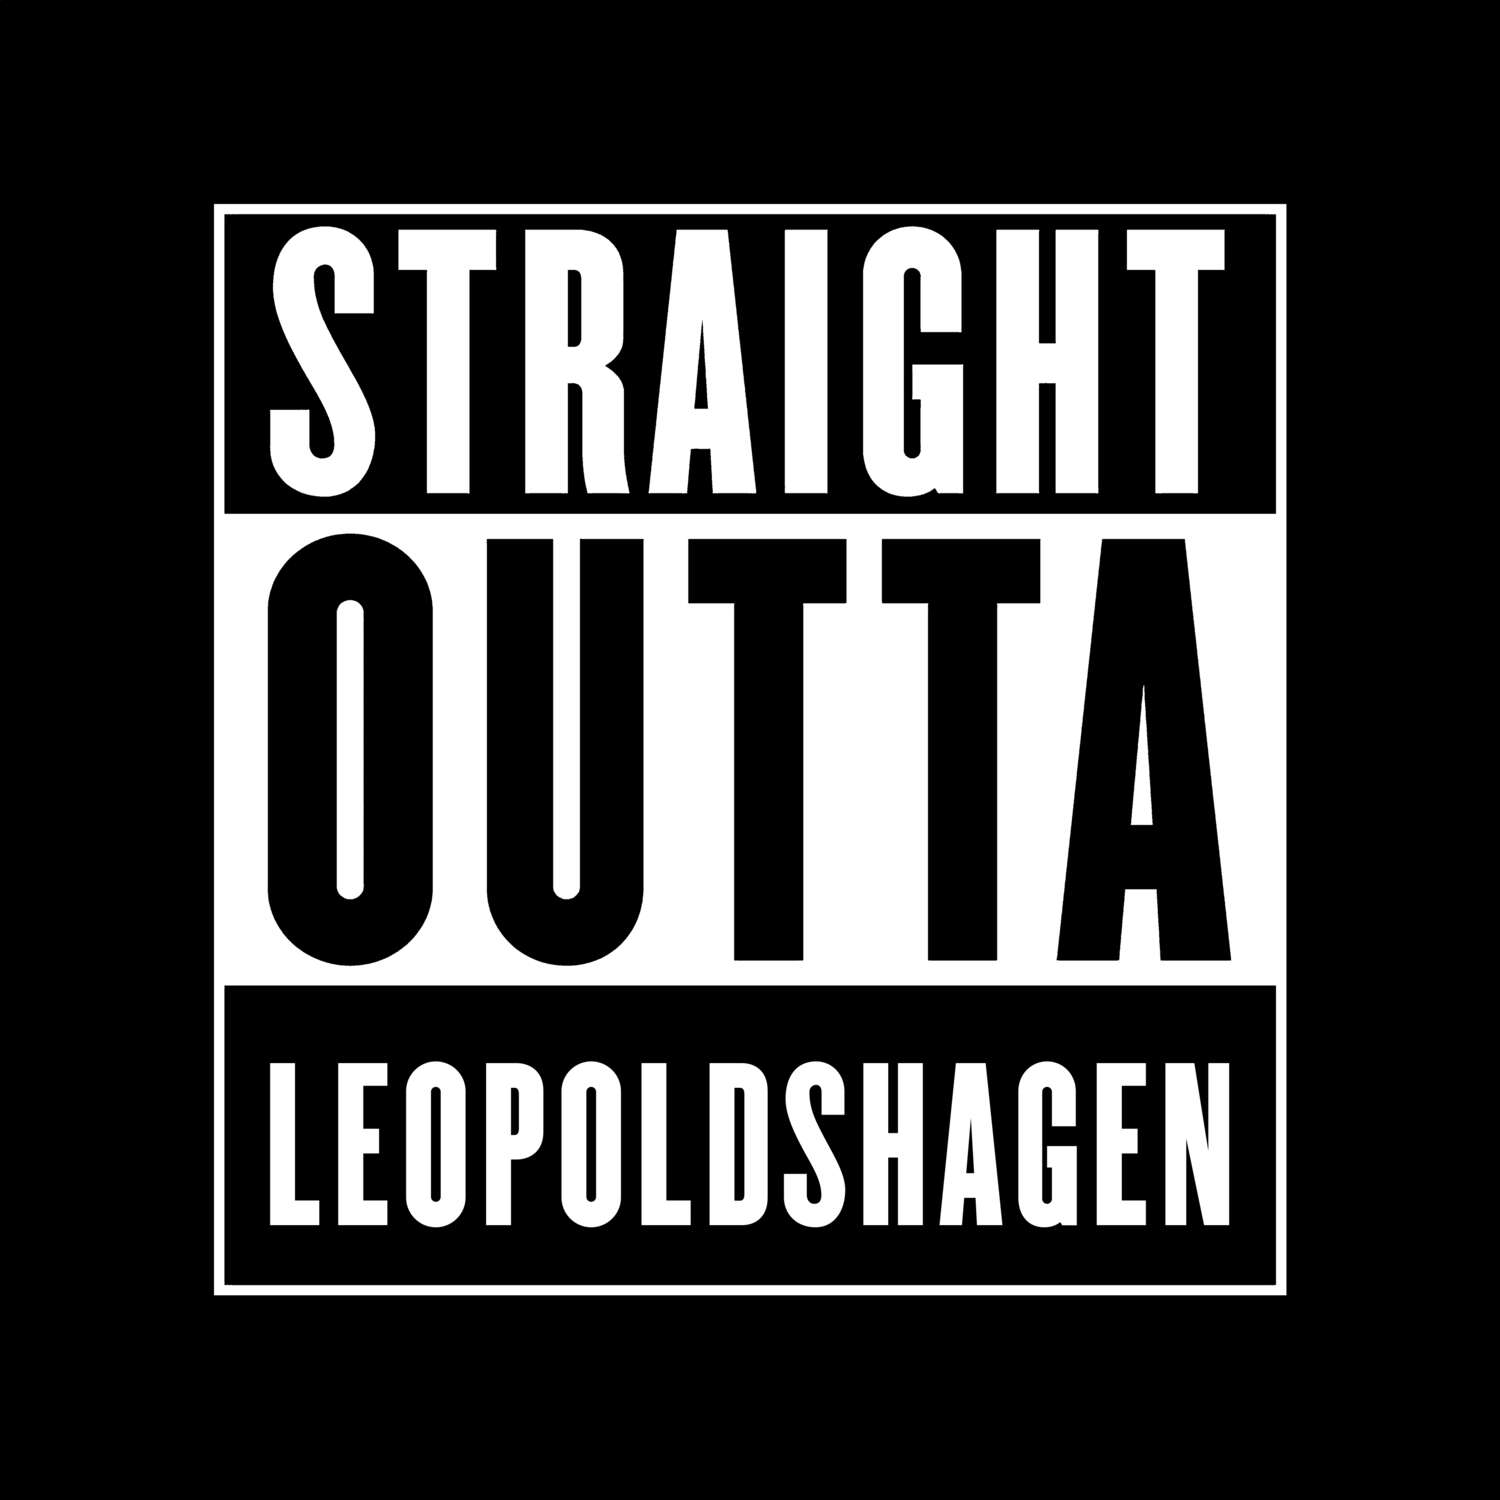 Leopoldshagen T-Shirt »Straight Outta«